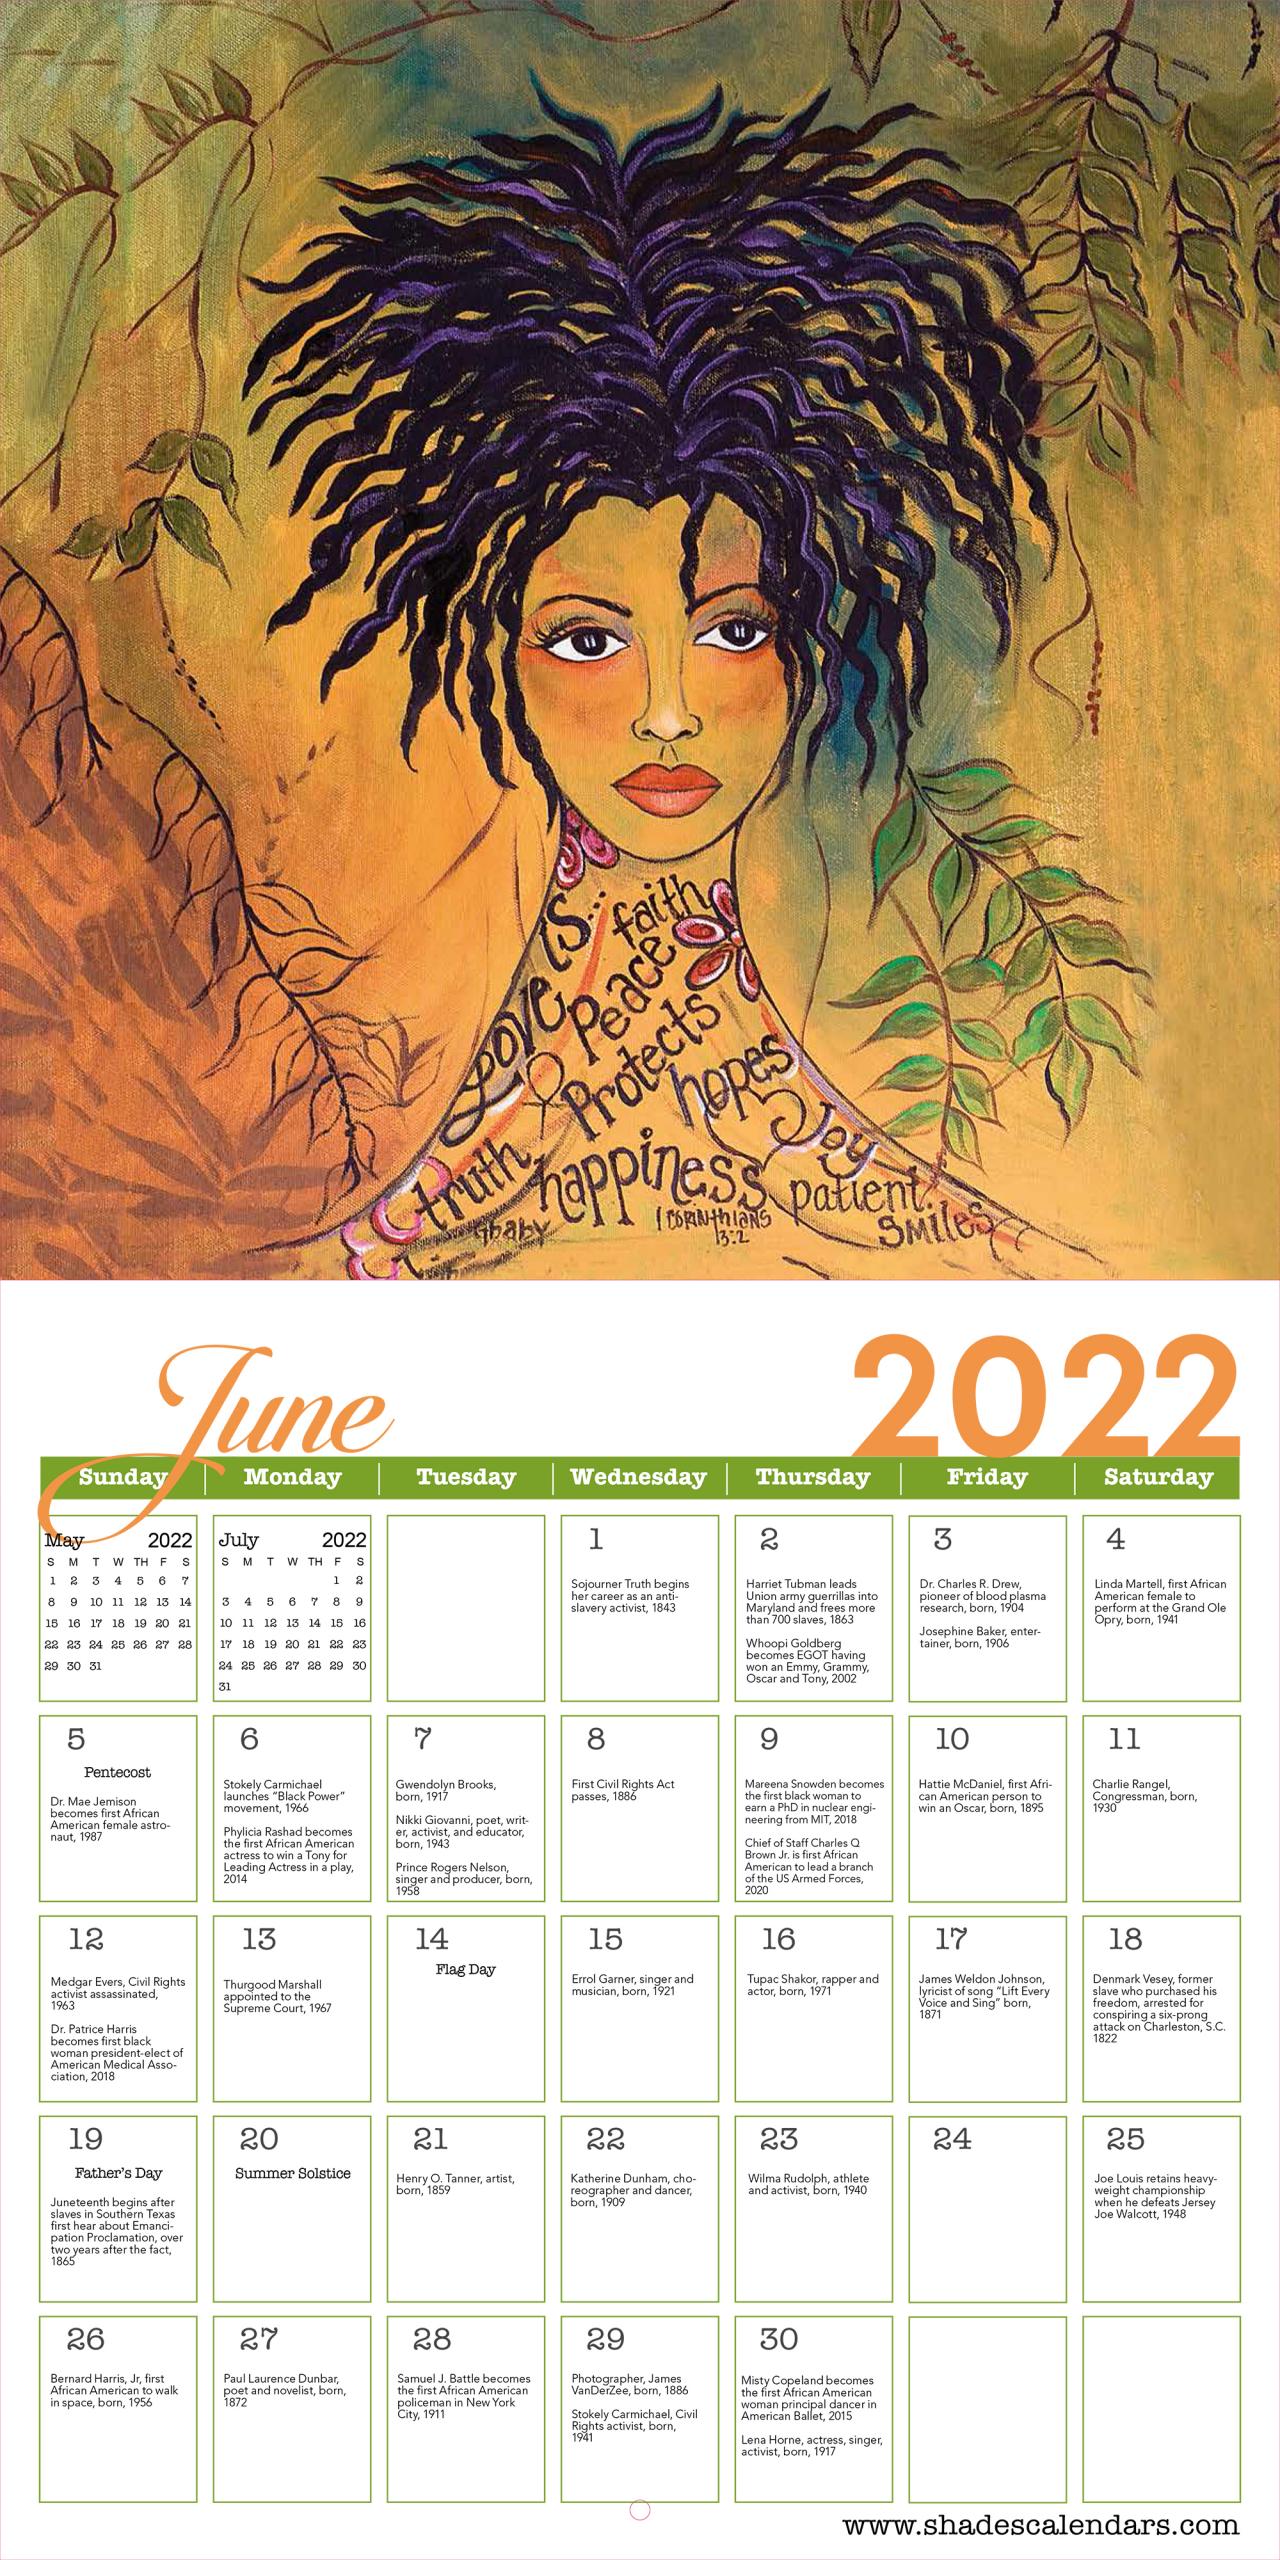 2022 I Am Life Wall Calendar by Sylvia “Gbaby” Cohen